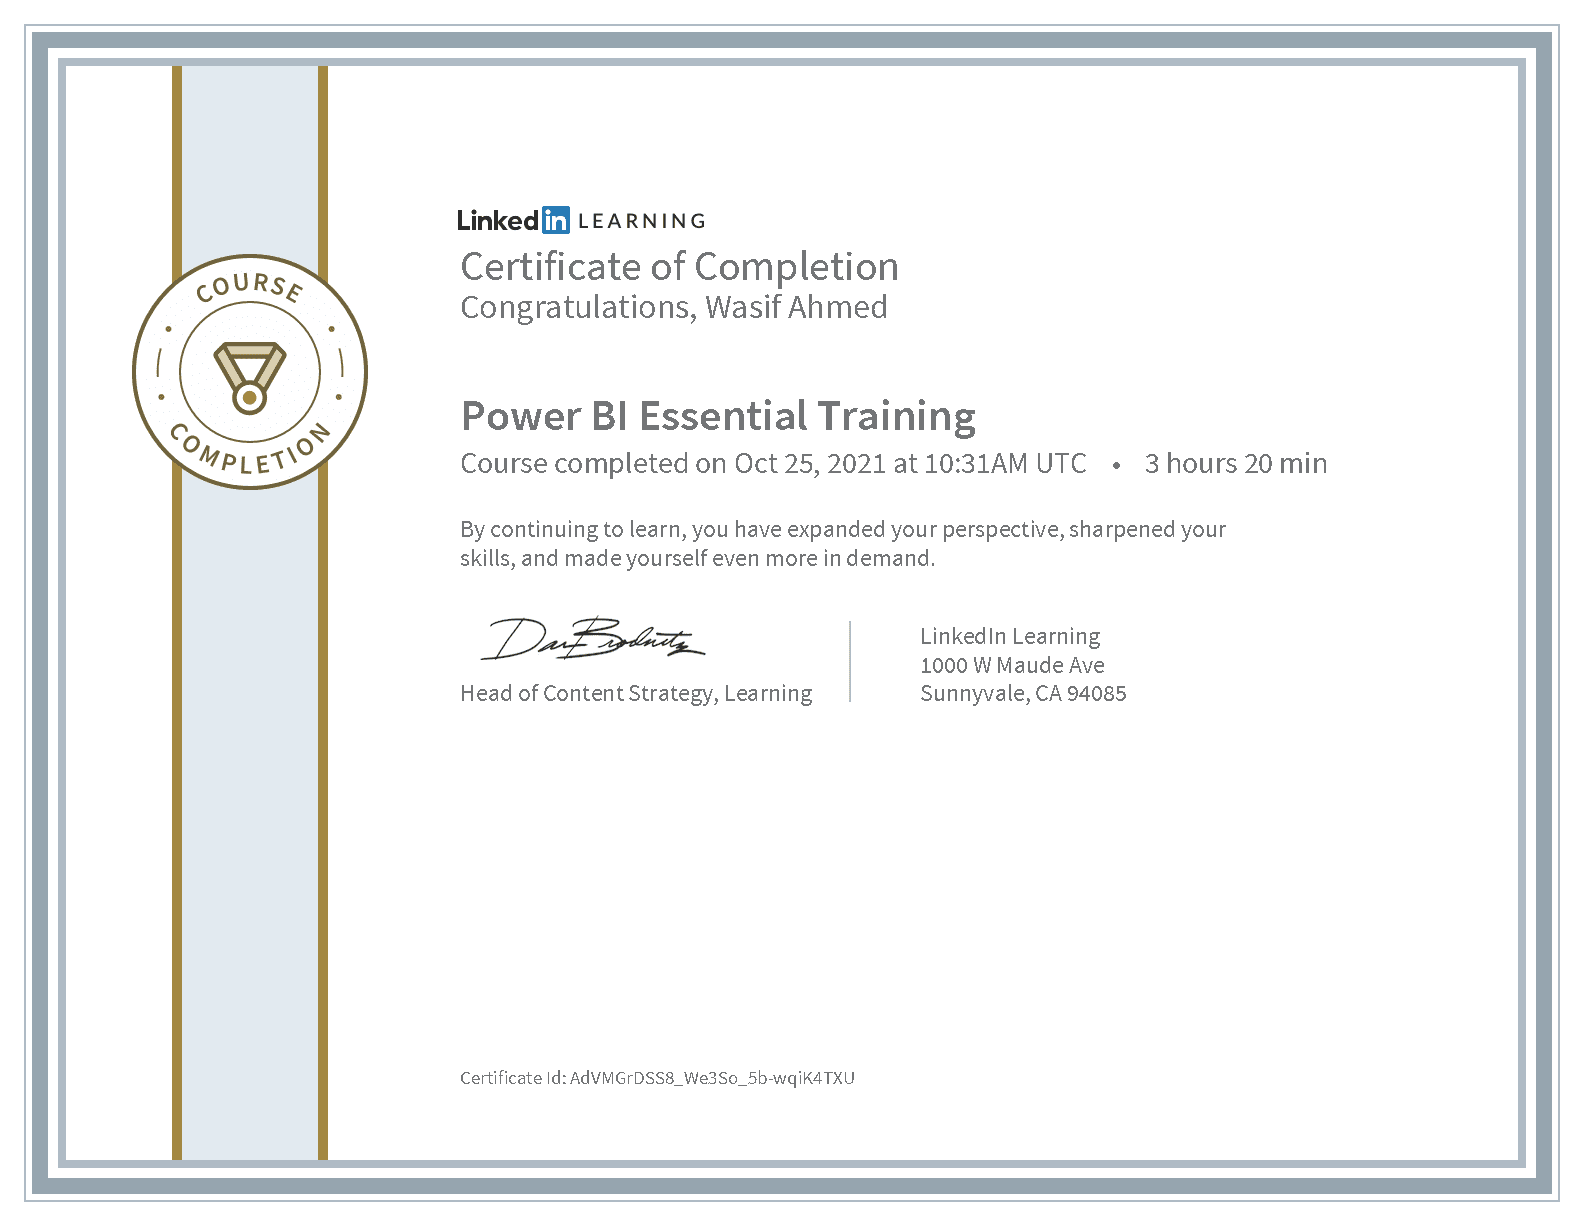 Power BI Essential Training